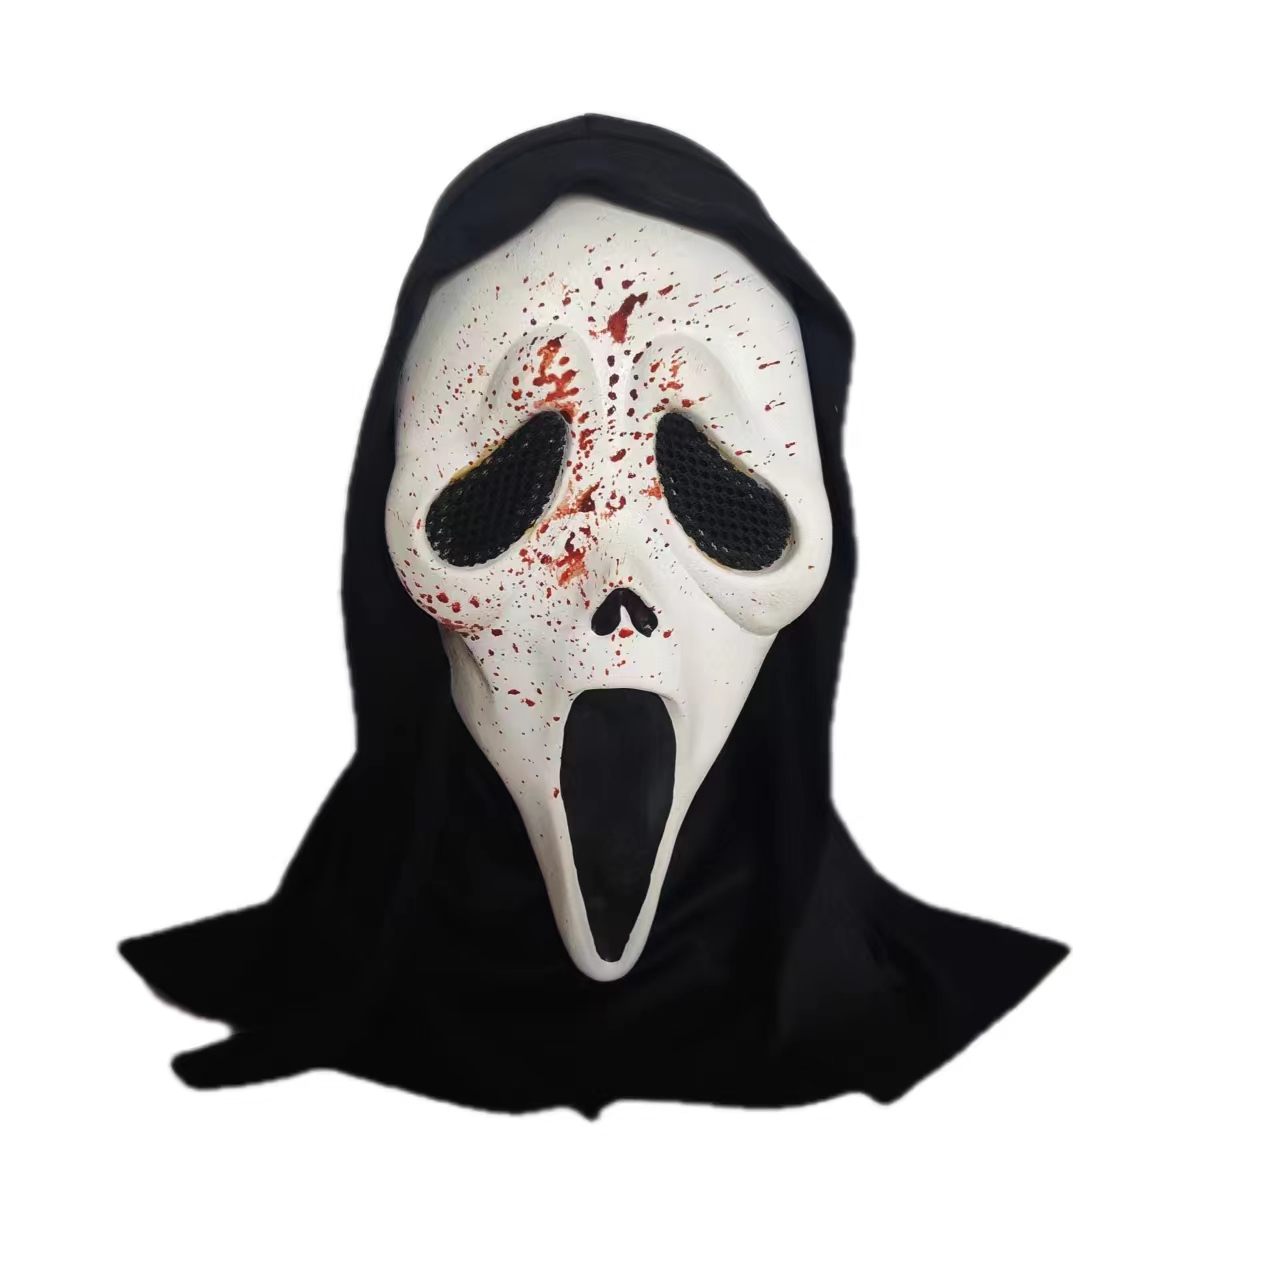 Scream Mask Halloween 장난감 무료 배송 게임 두개골 마스크 급여일 코스프레 라텍스 마스크 재미있는 소품 장난감 파티 장난감 용품 배고픈 마스크 선물